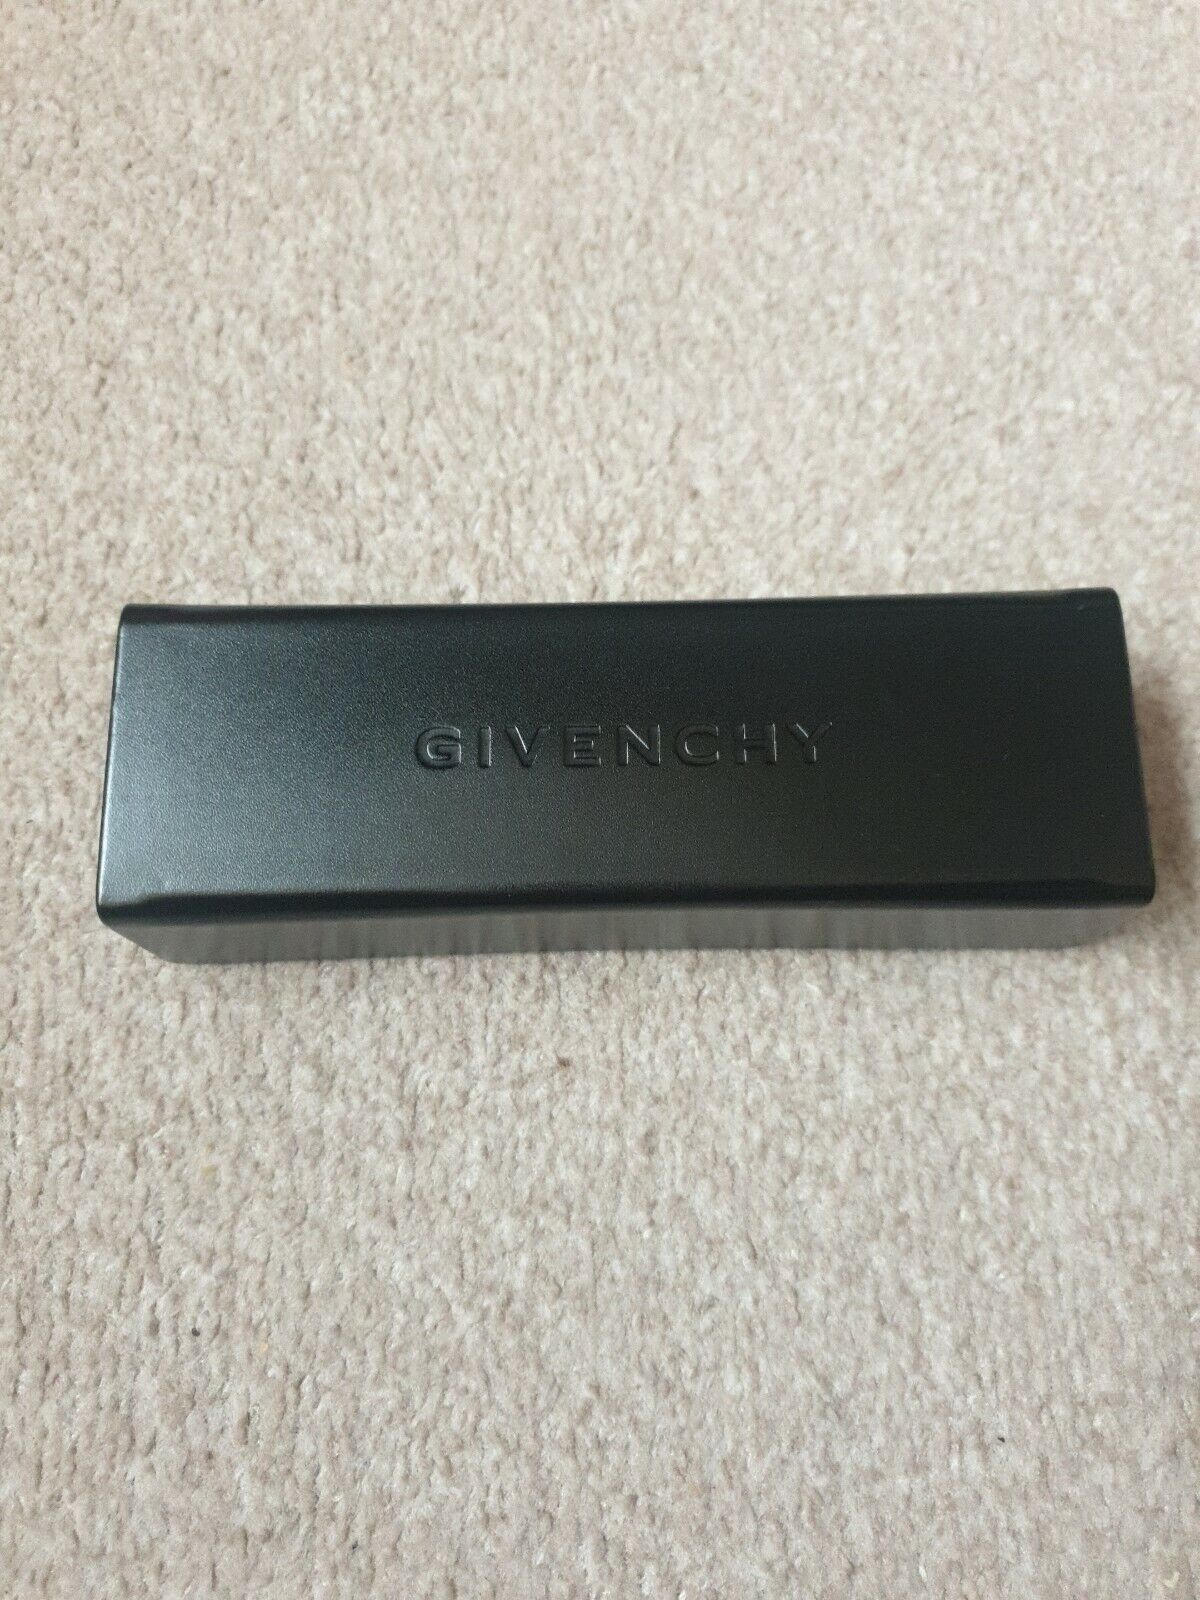 Givenchy Glasses Case Slim